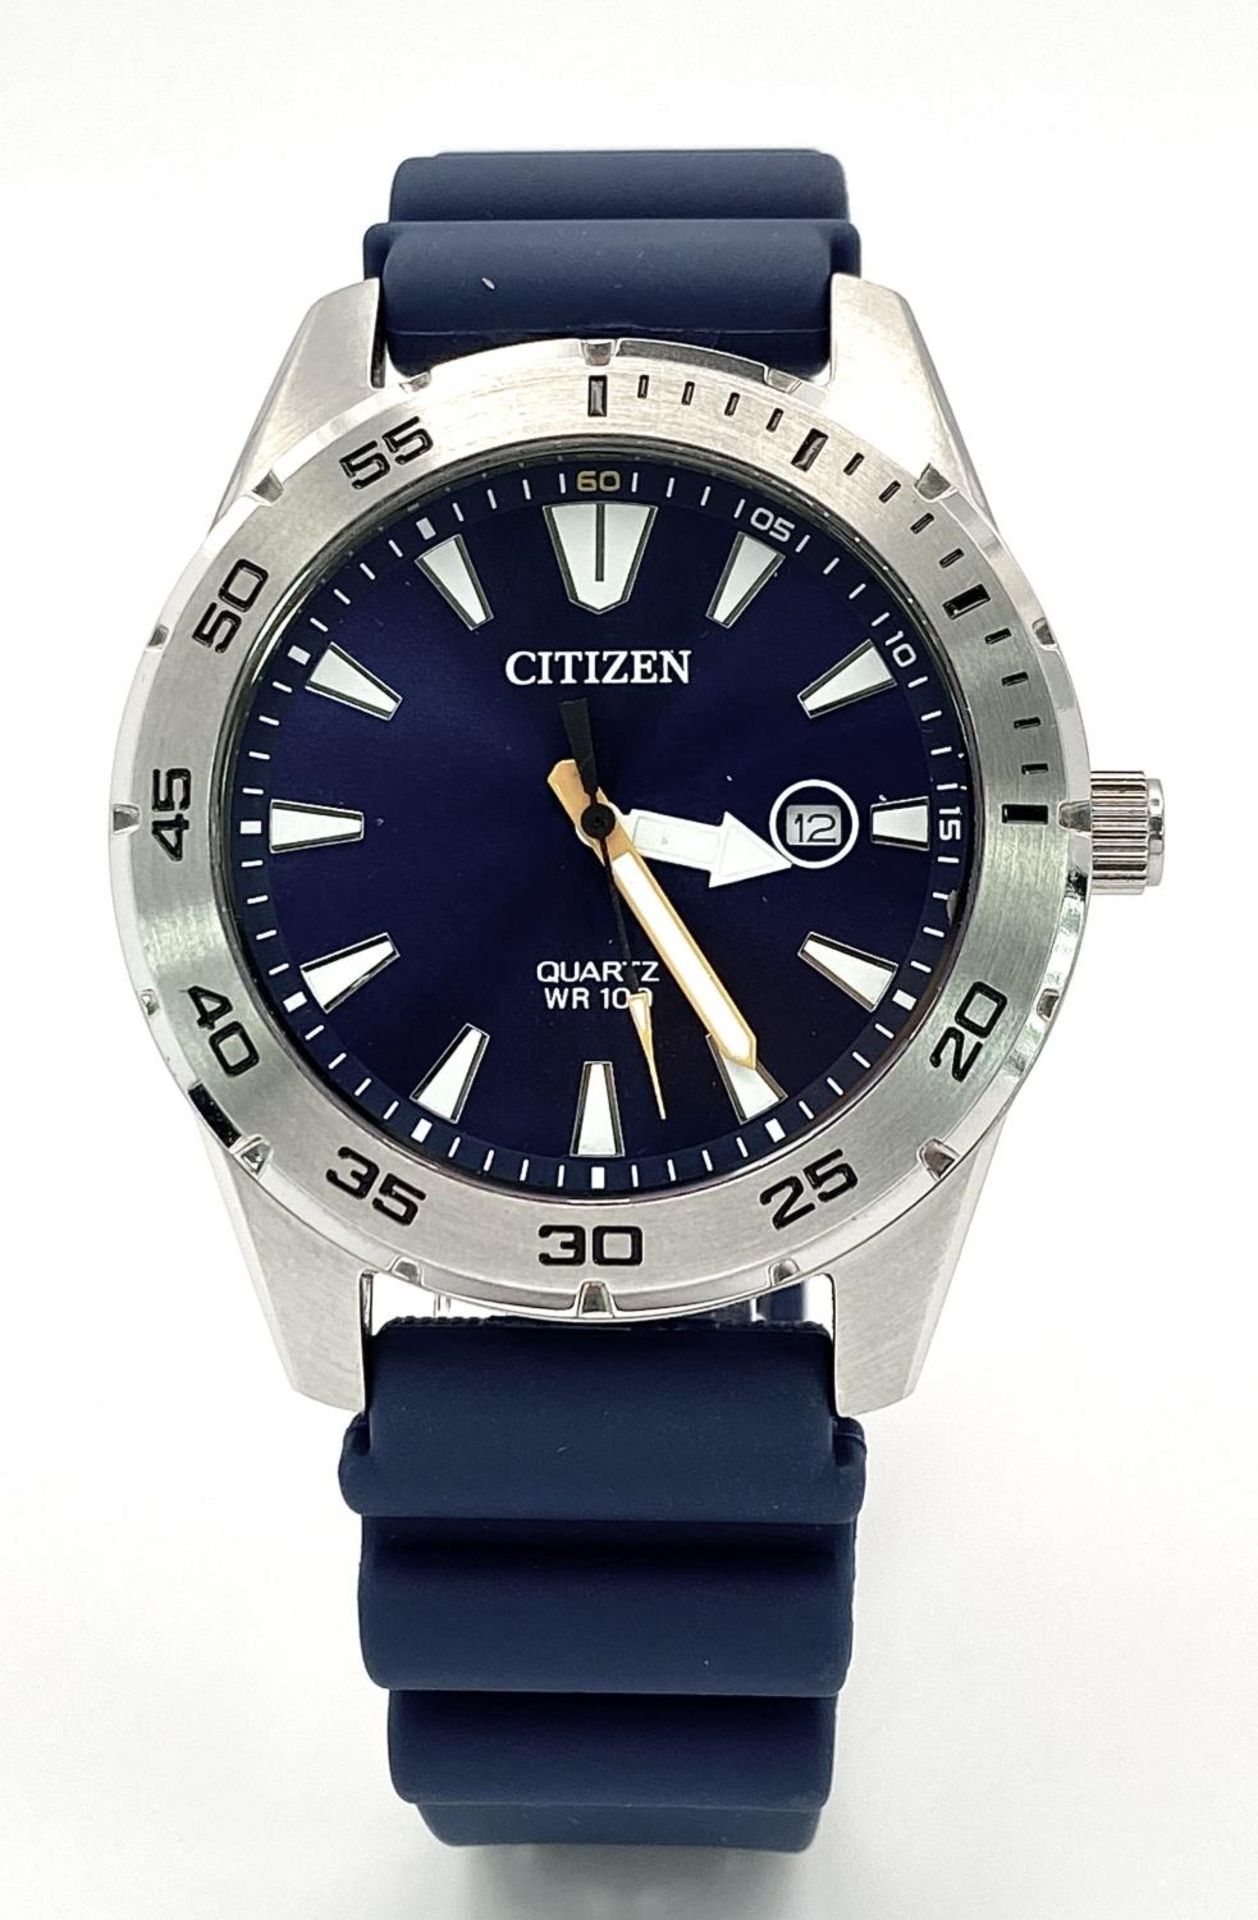 A Citizen Quartz Gents Watch. Blue rubber strap. Stainless steel case - 42mm. Blue dial with date - Bild 3 aus 6